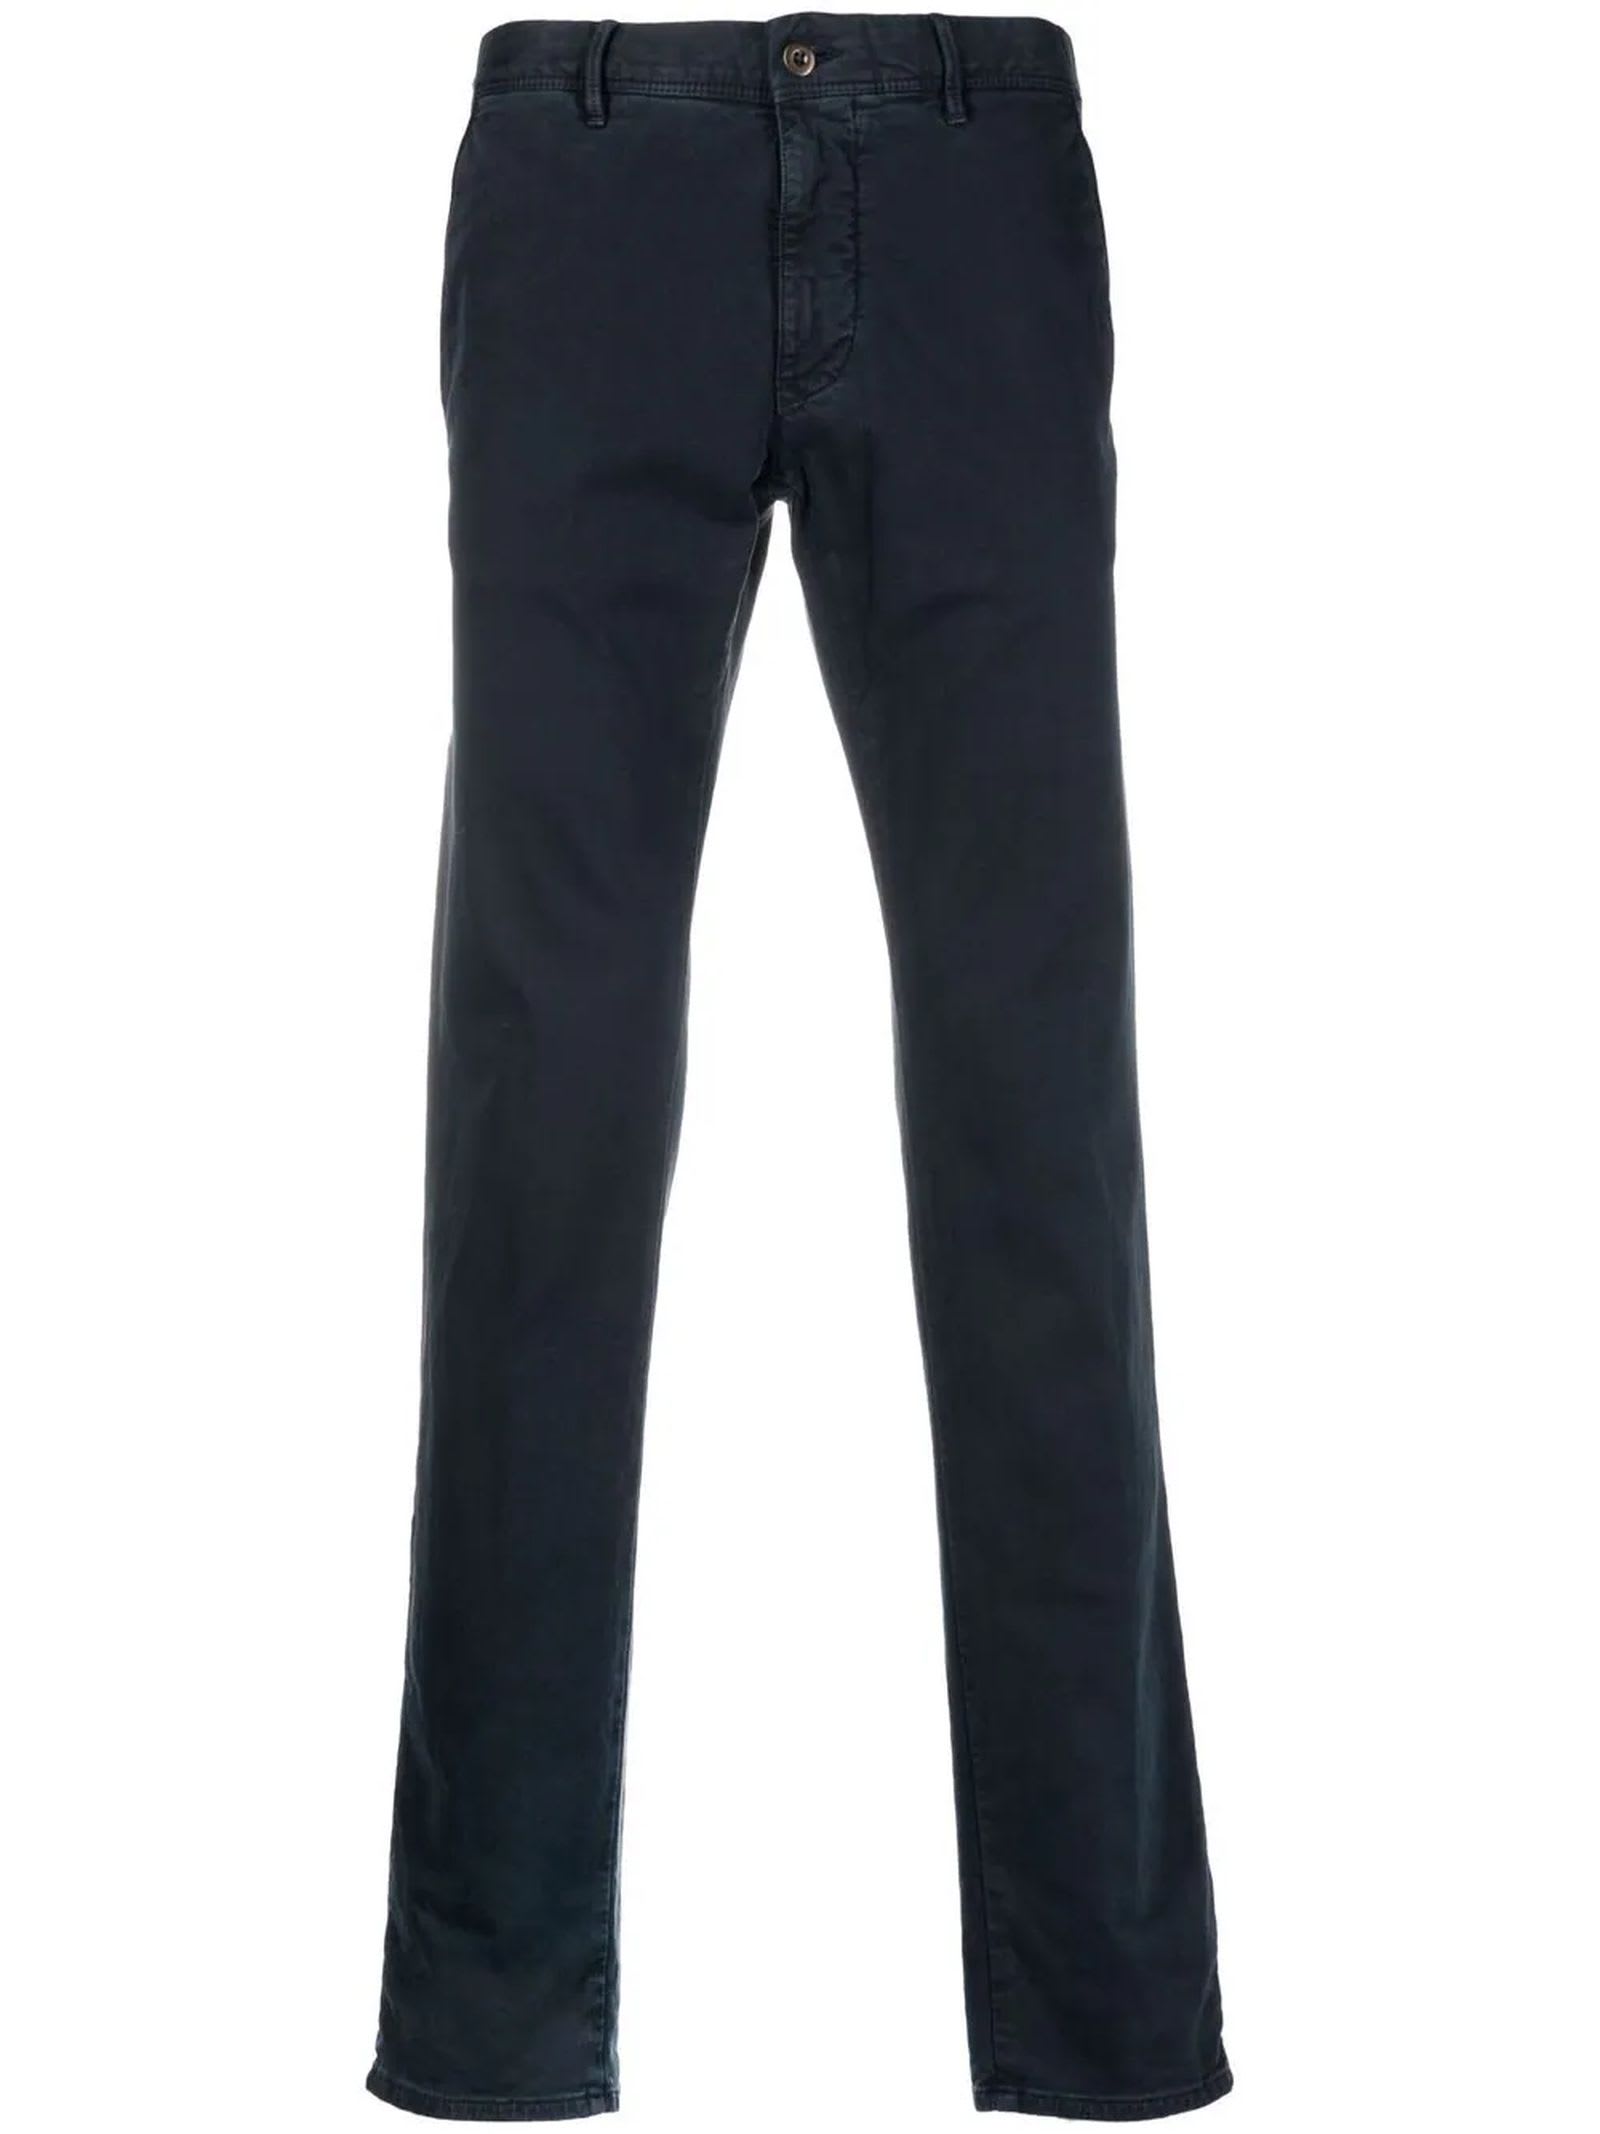 Incotex Navy Blue Cotton Chino Trousers